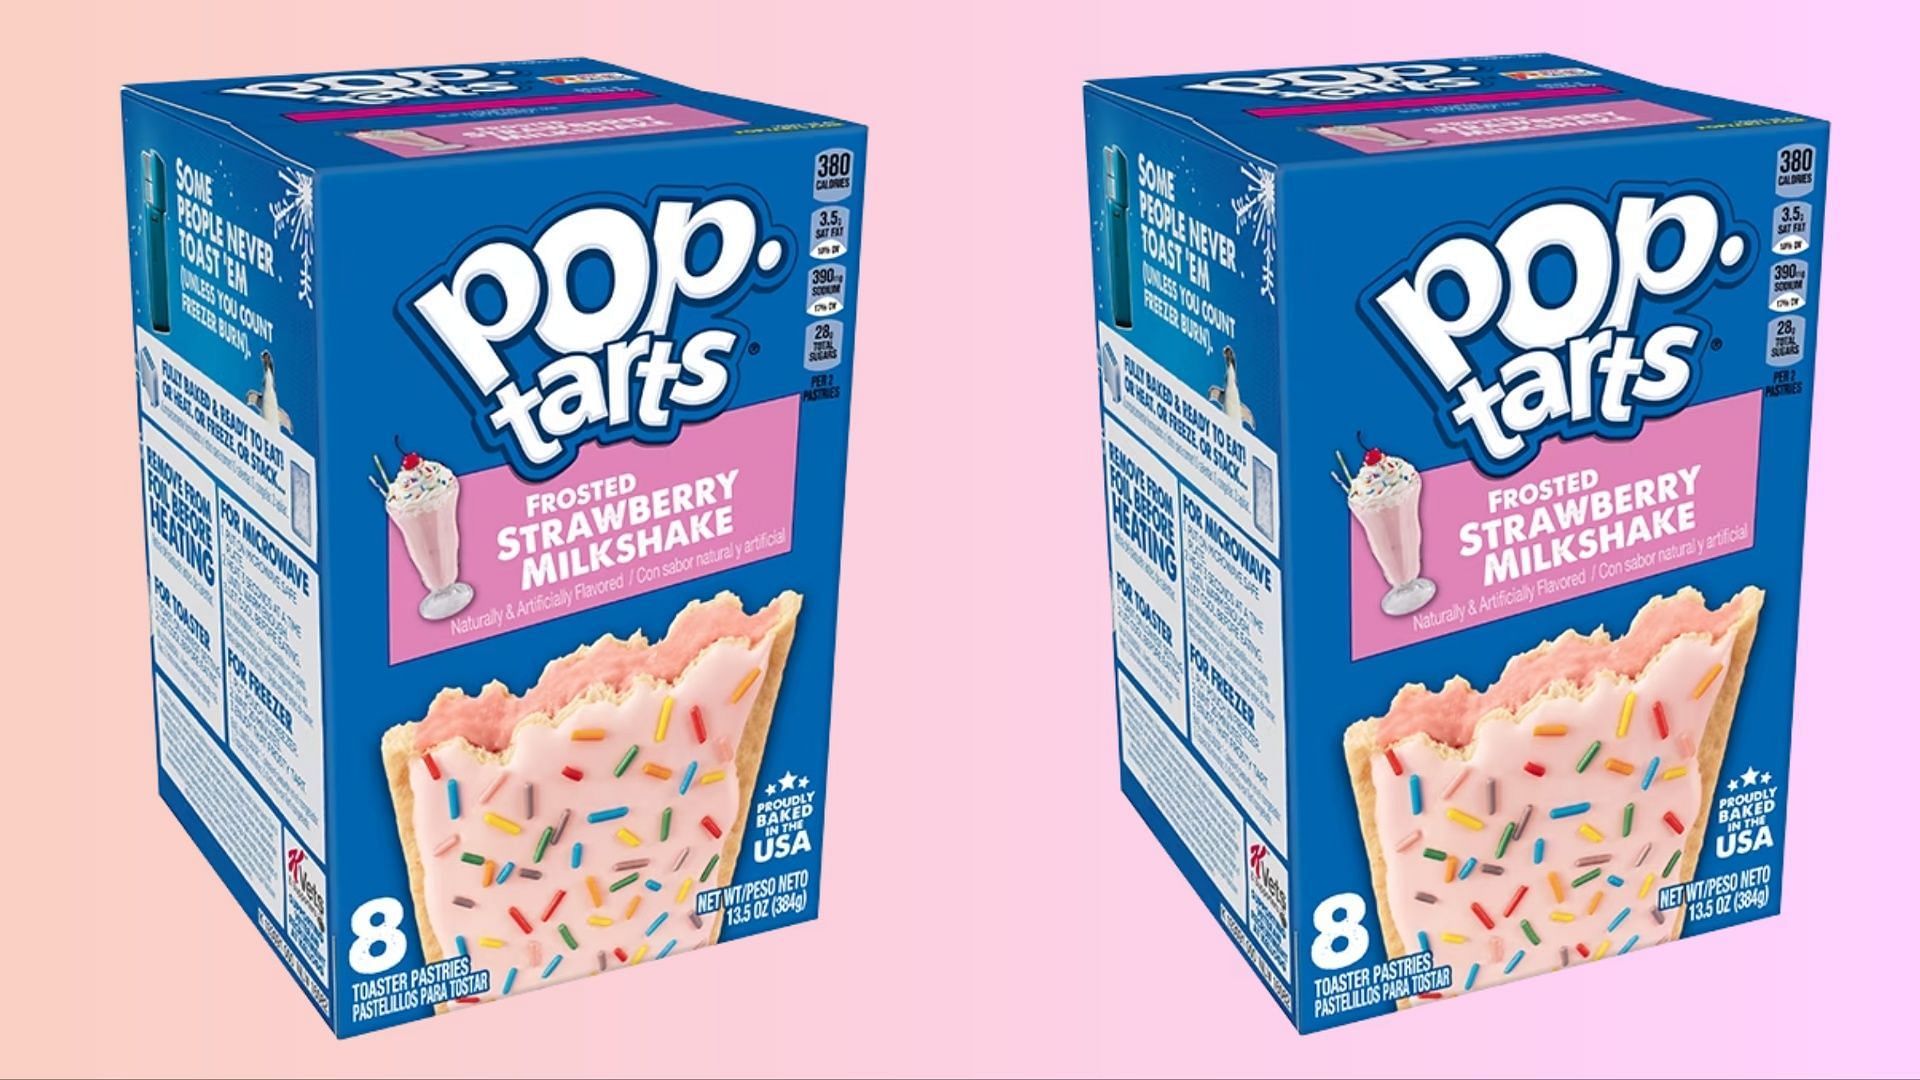 Pop-Tarts announced the return of the Frosted Strawberry Milkshake flavor (Image via Pop-Tarts)